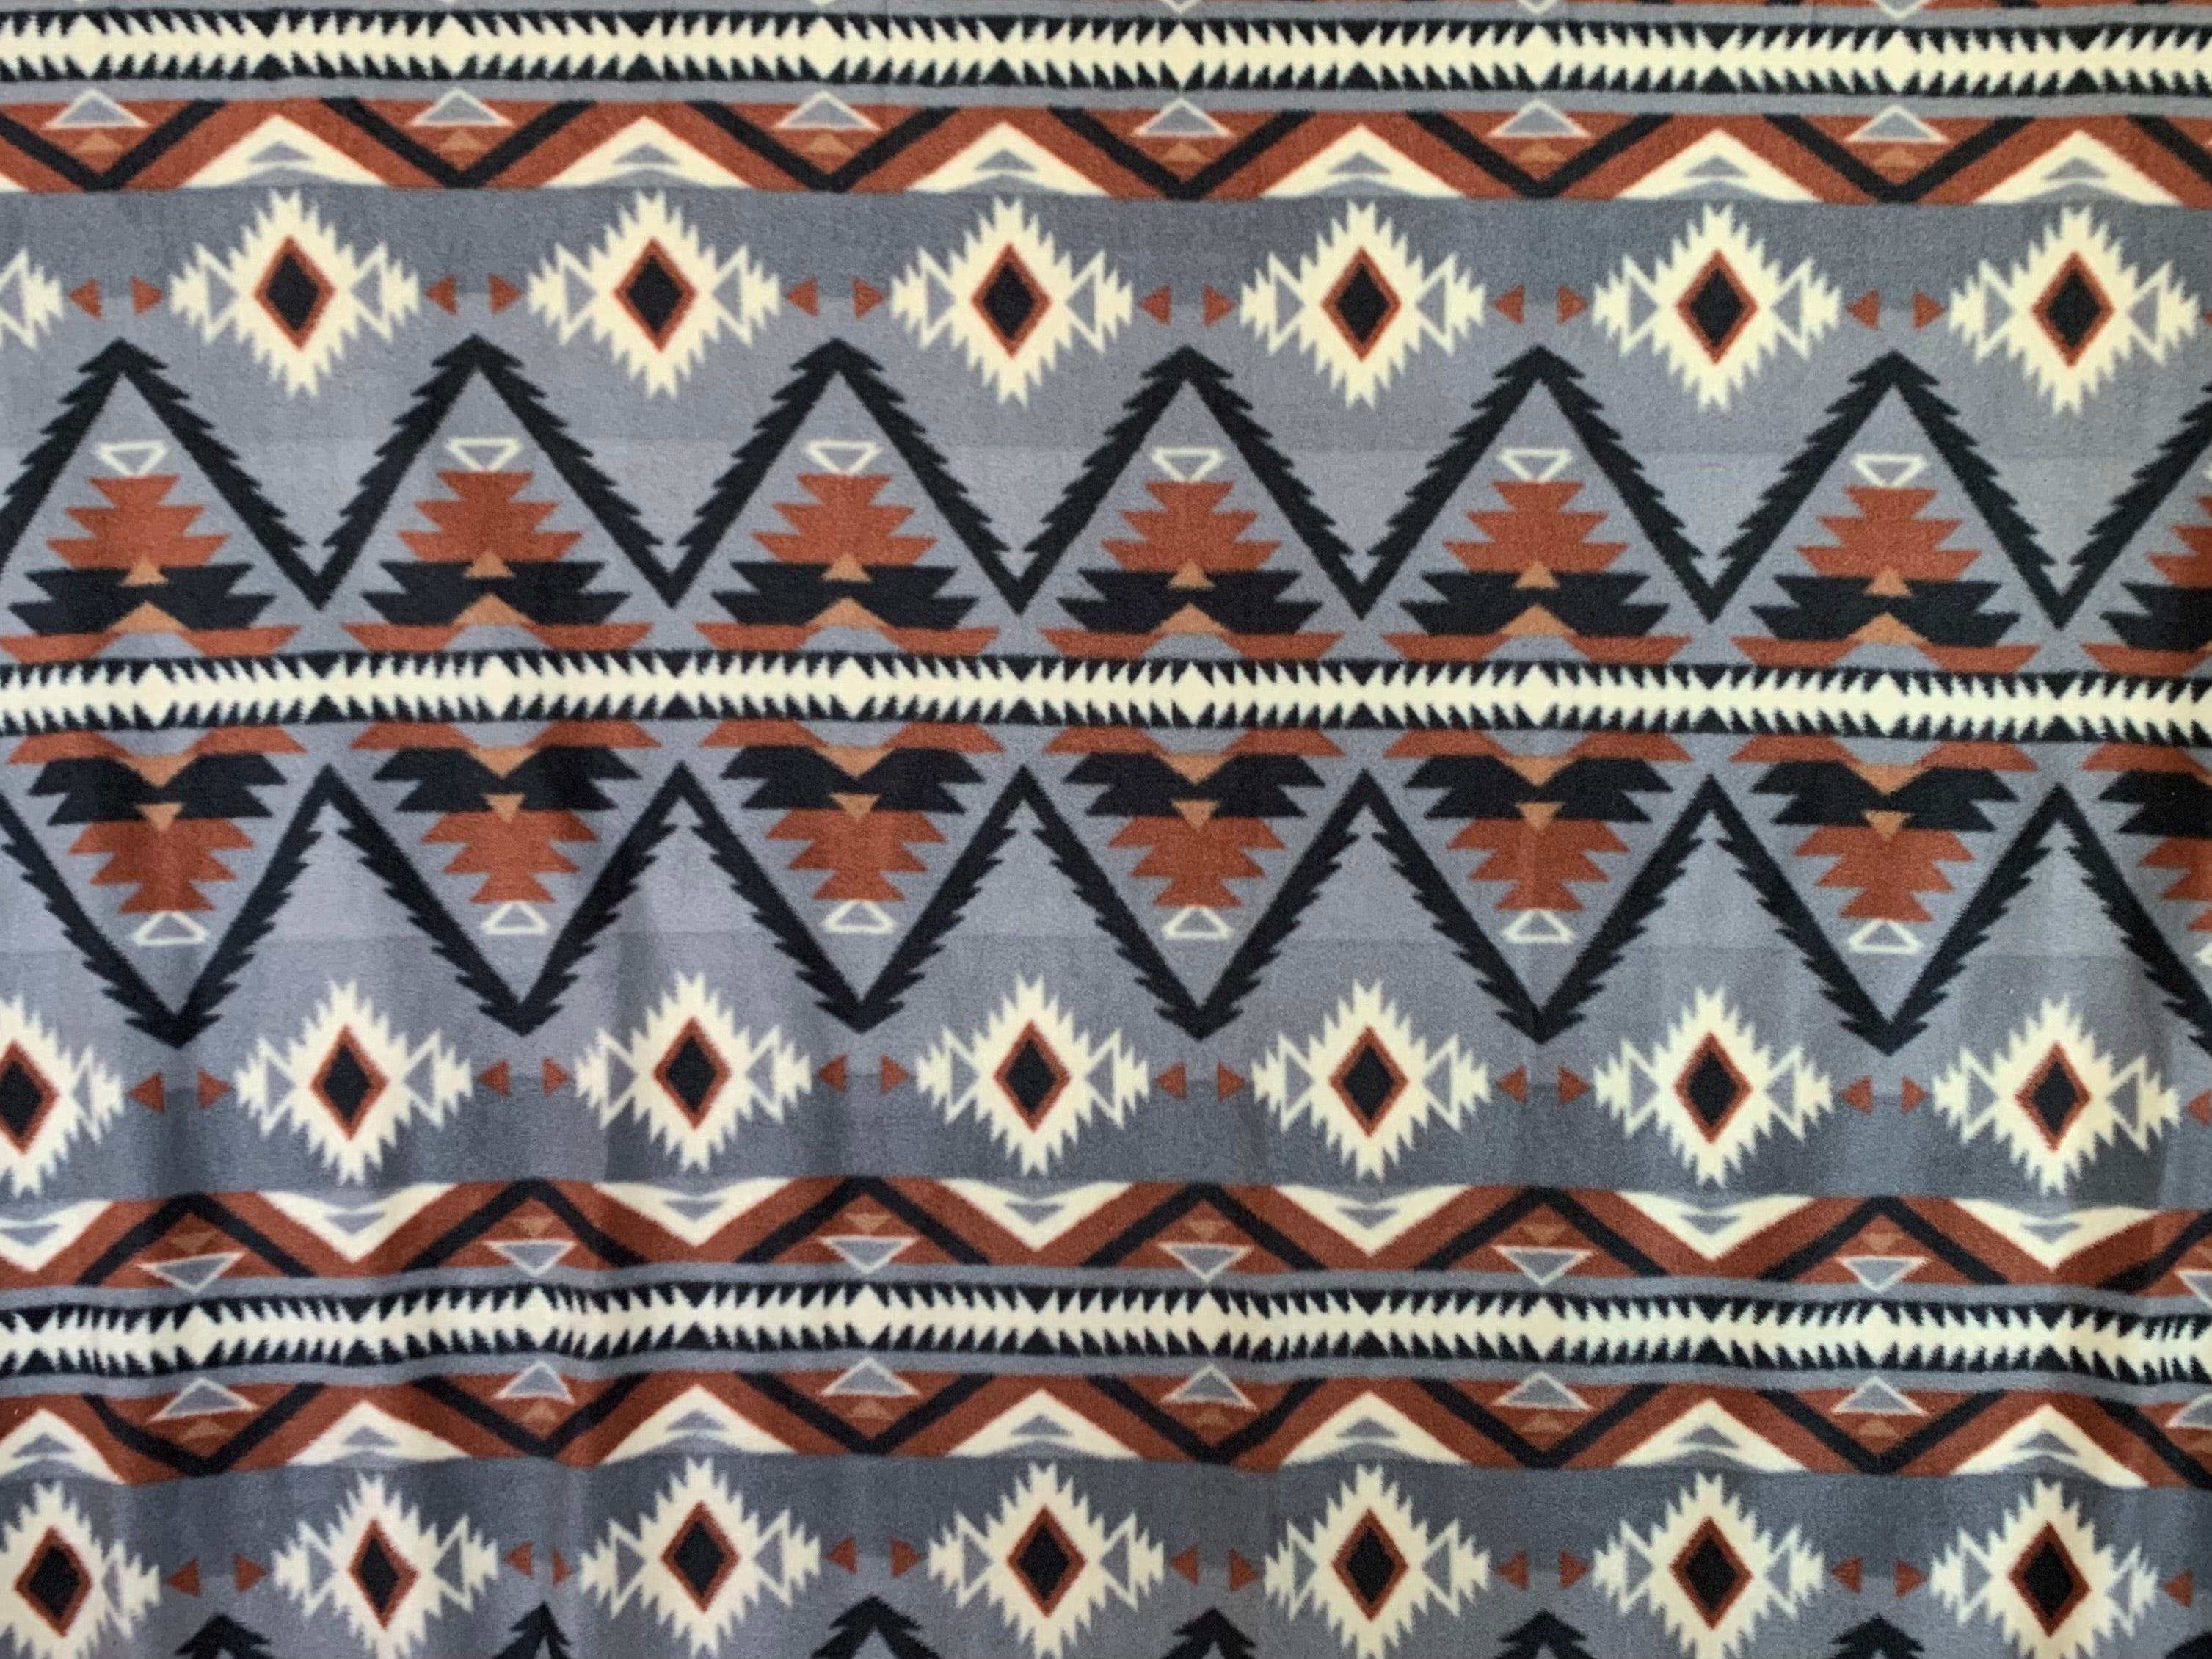 Tribal Winter Fleece - Raymi 53281-1